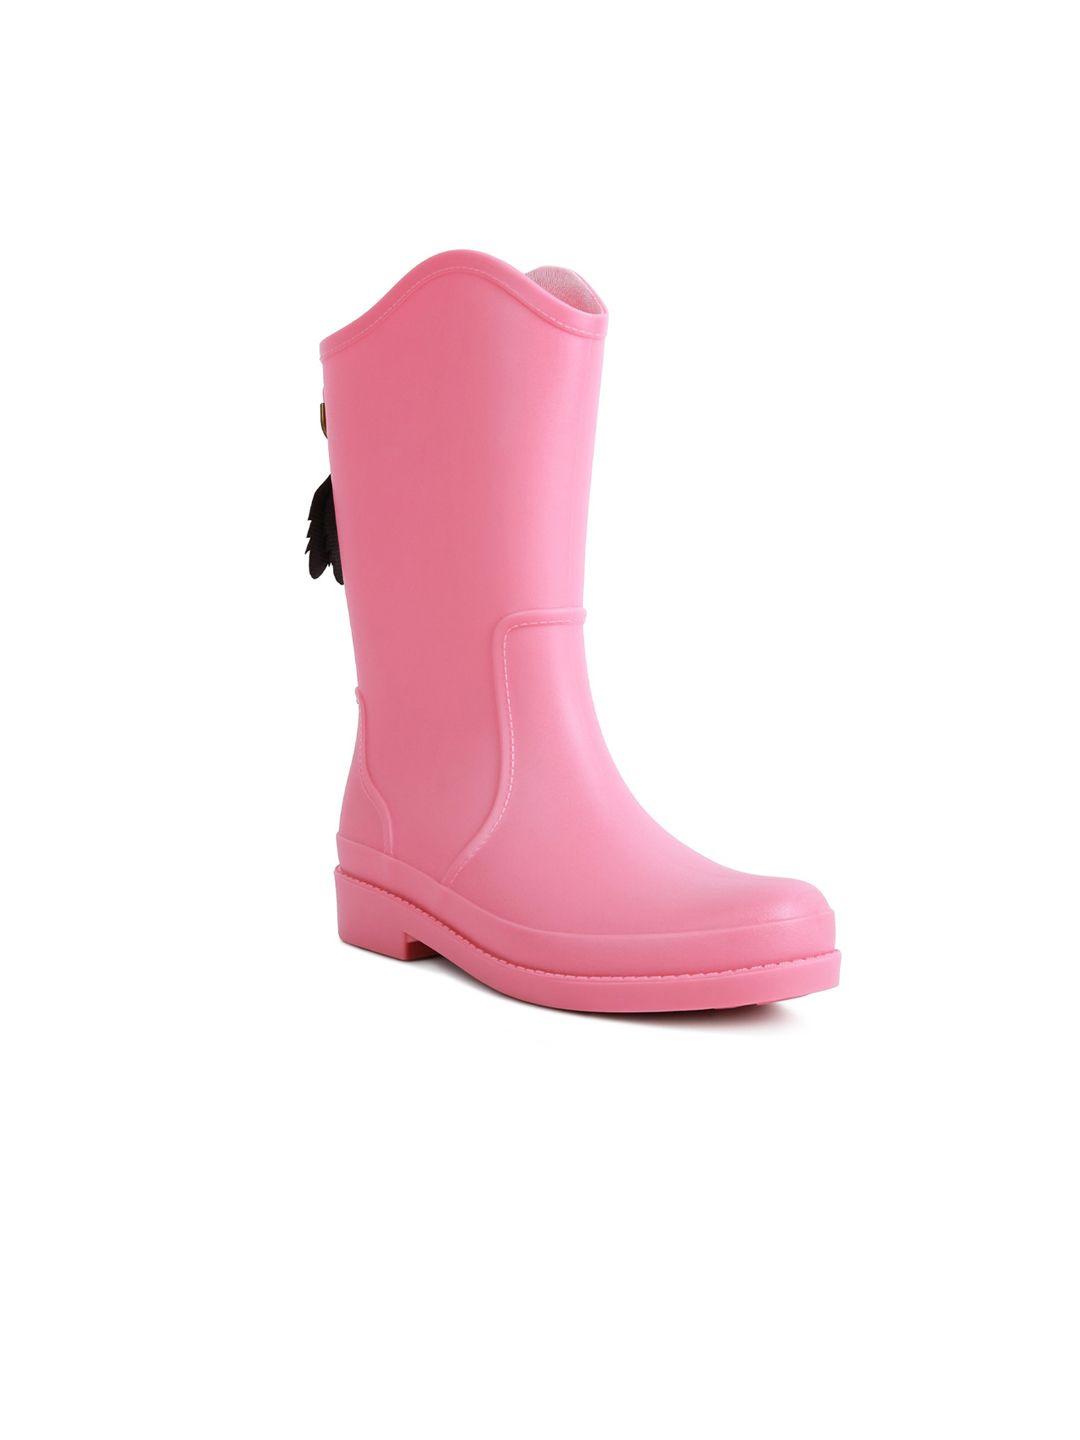 london rag women high top block heels rain boots